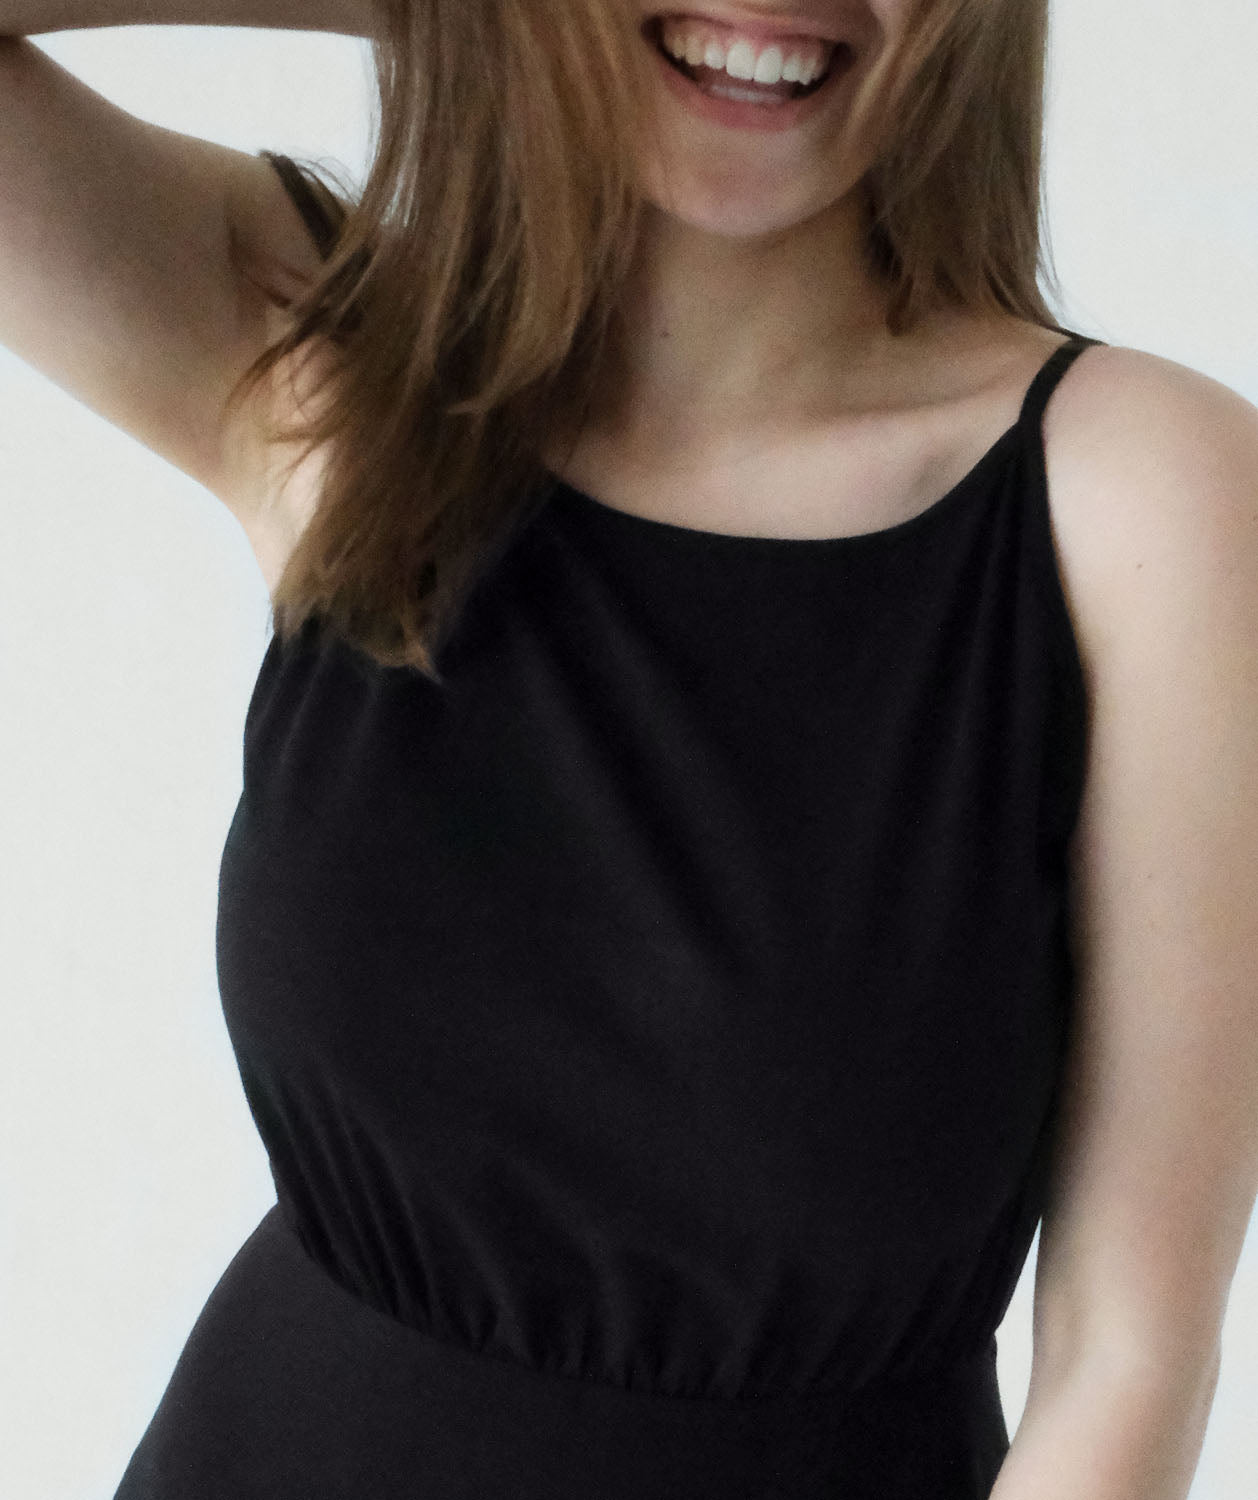 KAYA maxi dress in Black